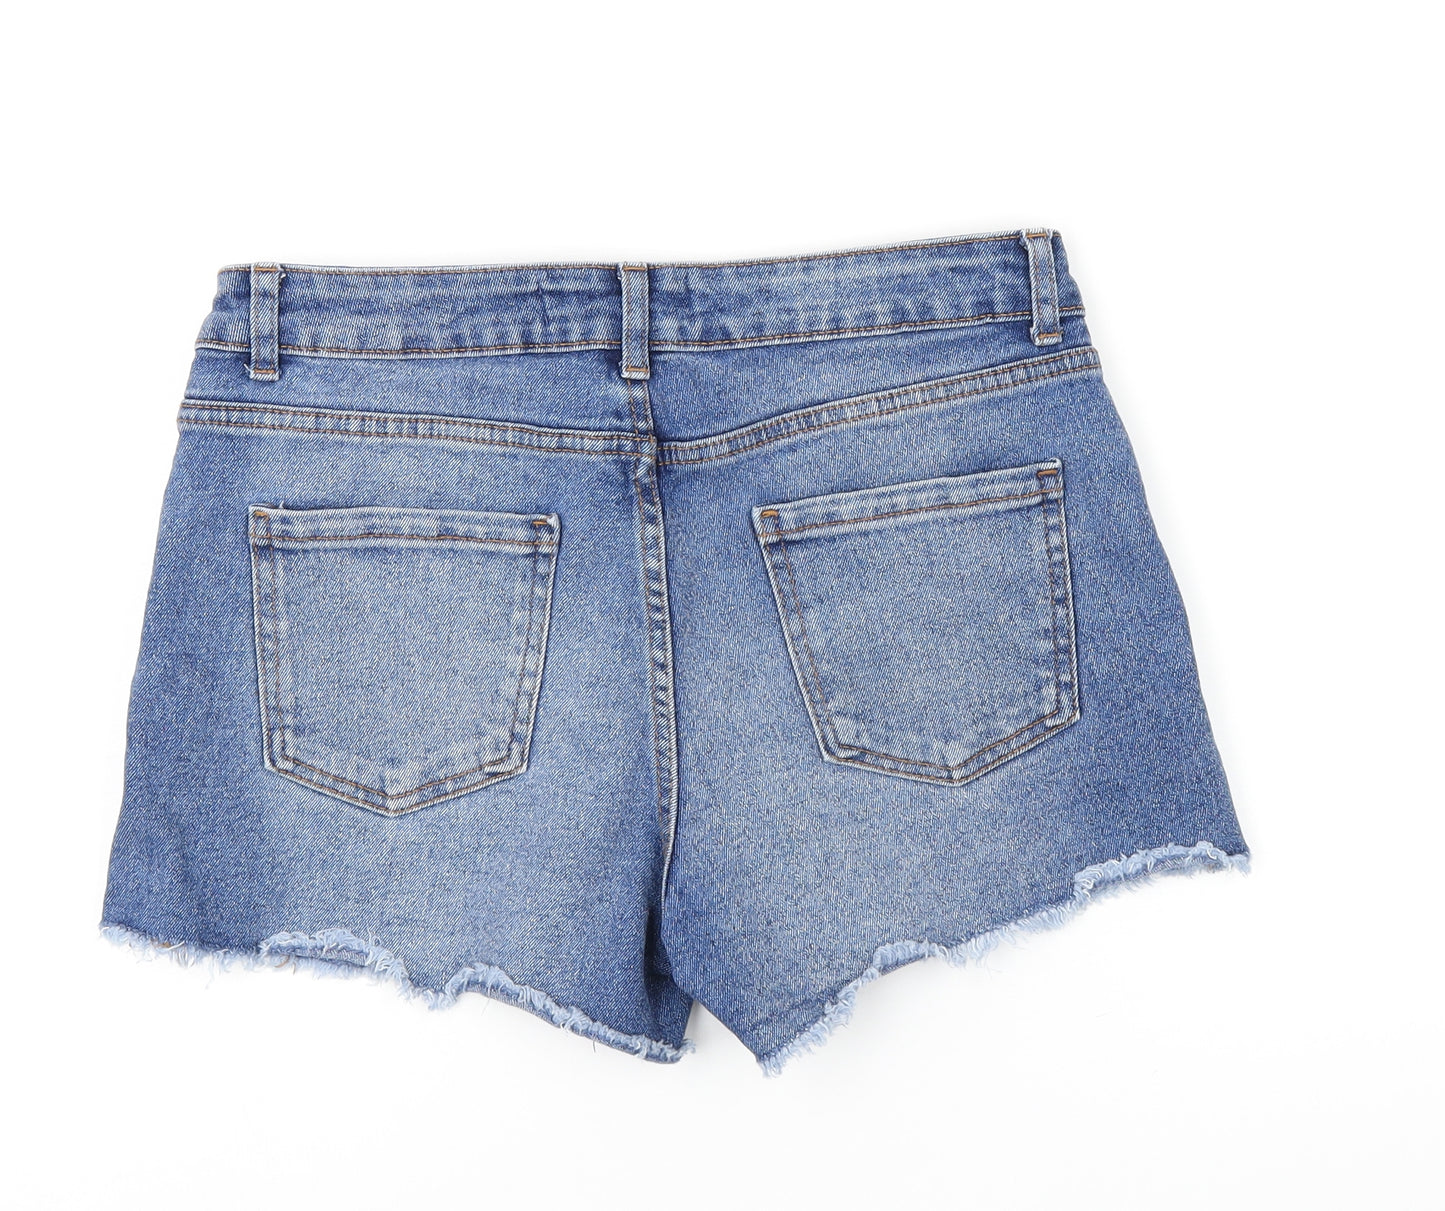 Denim & Co. Womens Blue Cotton Cut-Off Shorts Size 12 L3 in Regular Zip - Distressed Hems